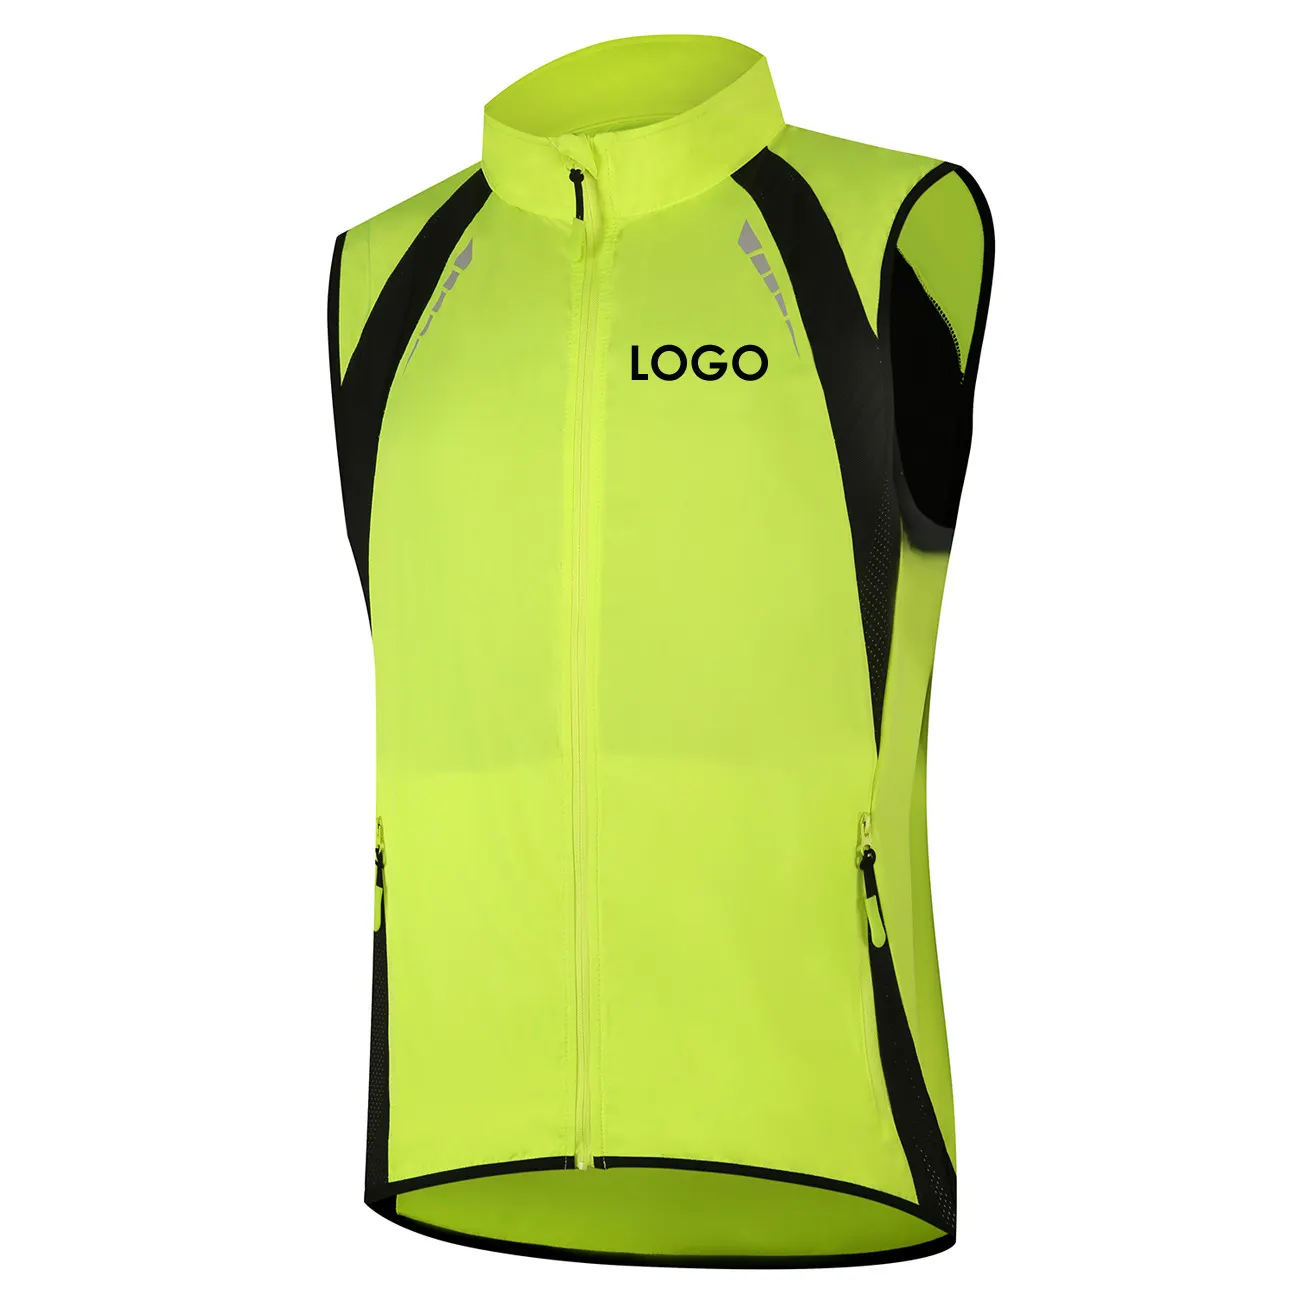 Windproof Rainproof Breathable Bicycle Cycling Clothes Sleeveless Running Sports Windbreaker waistcoat